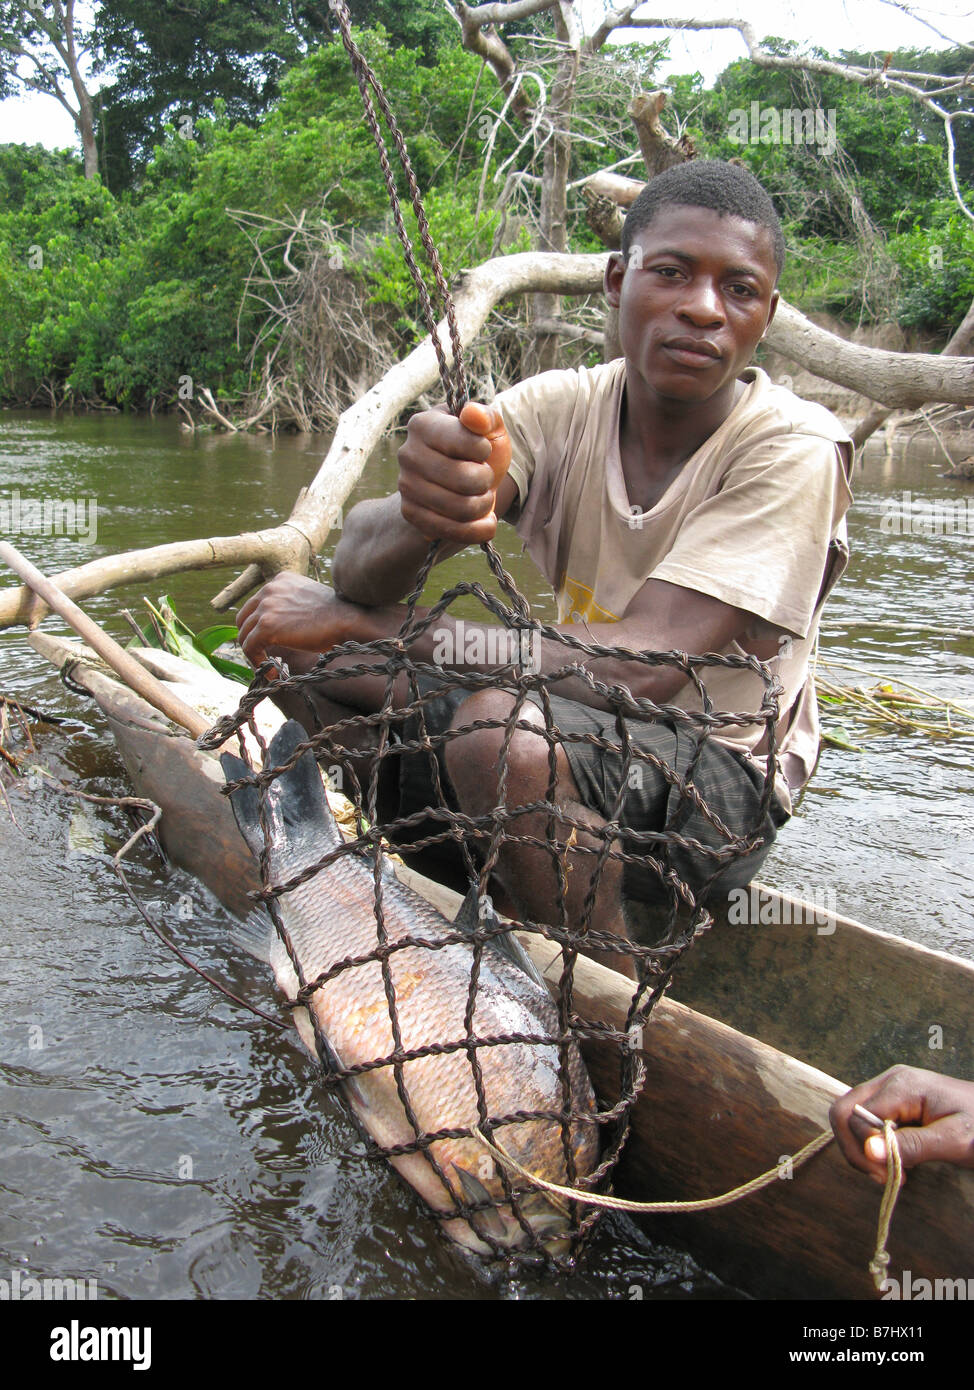 https://c8.alamy.com/comp/B7HX11/congo-river-fisherman-in-dugout-canoe-with-a-carp-or-sucking-fish-B7HX11.jpg